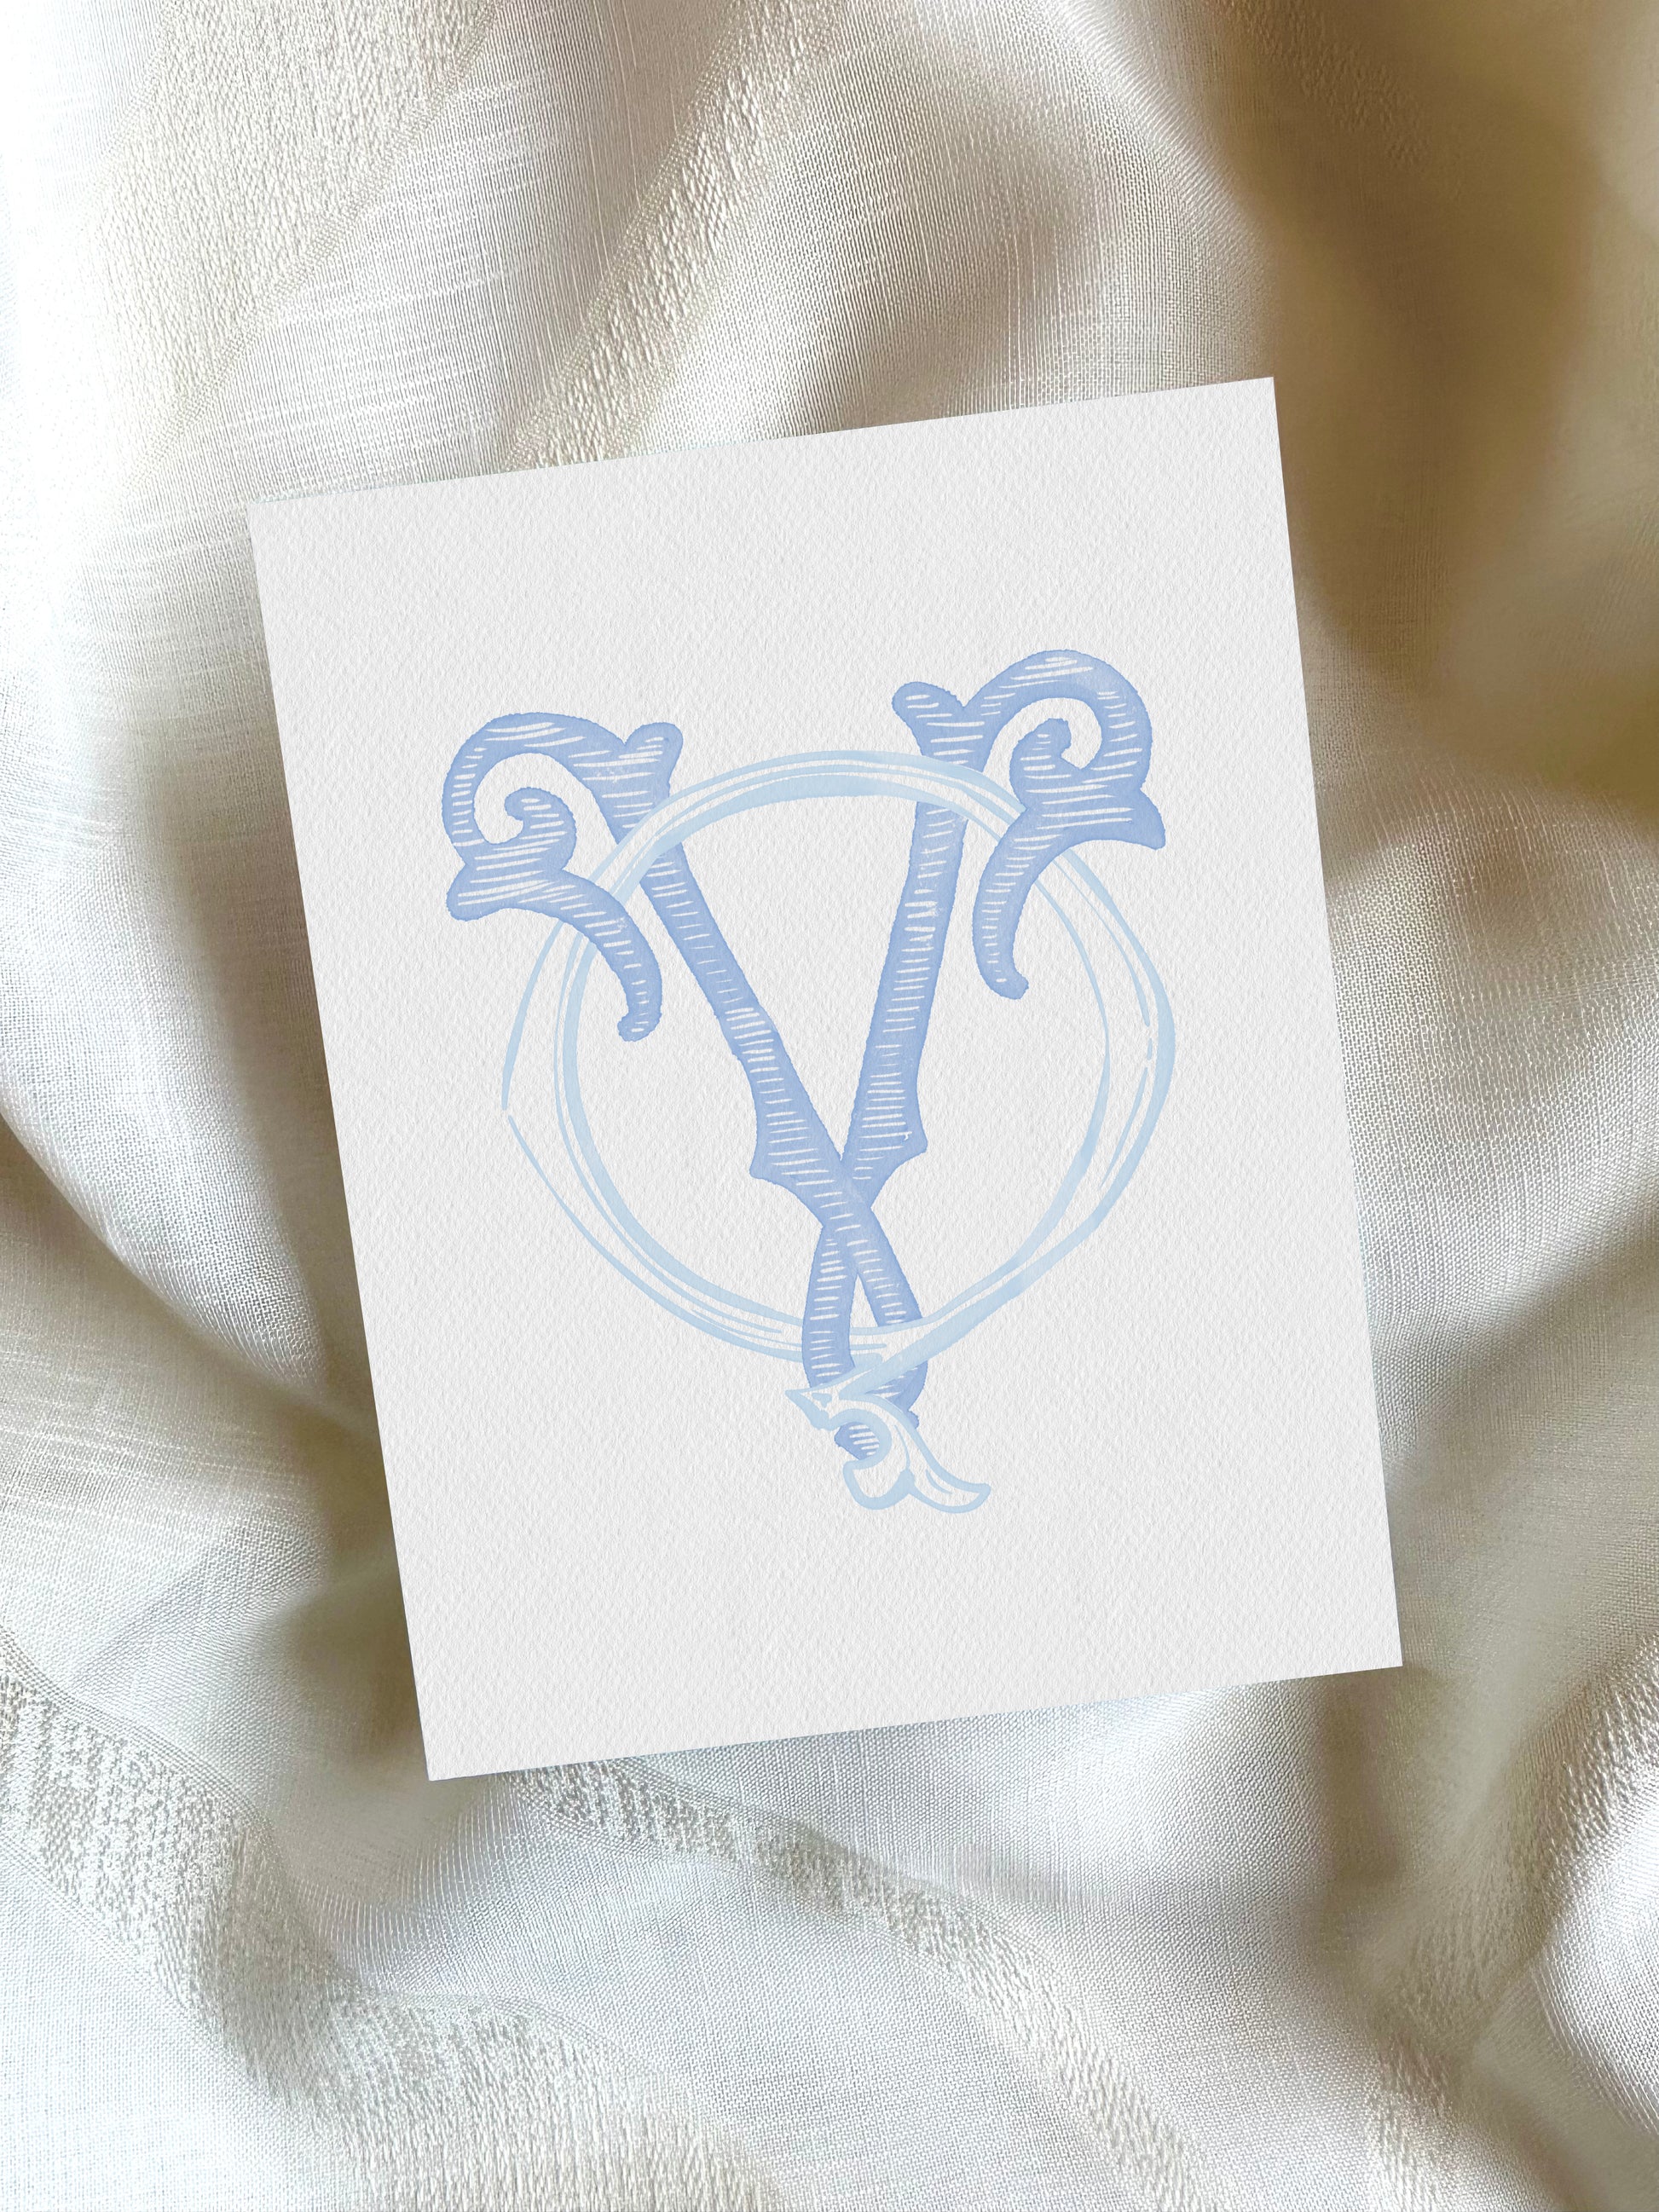 2 Letter Monogram with Letters QV VQ | Digital Download - Wedding Monogram SVG, Personal Logo, Wedding Logo for Wedding Invitations The Wedding Crest Lab